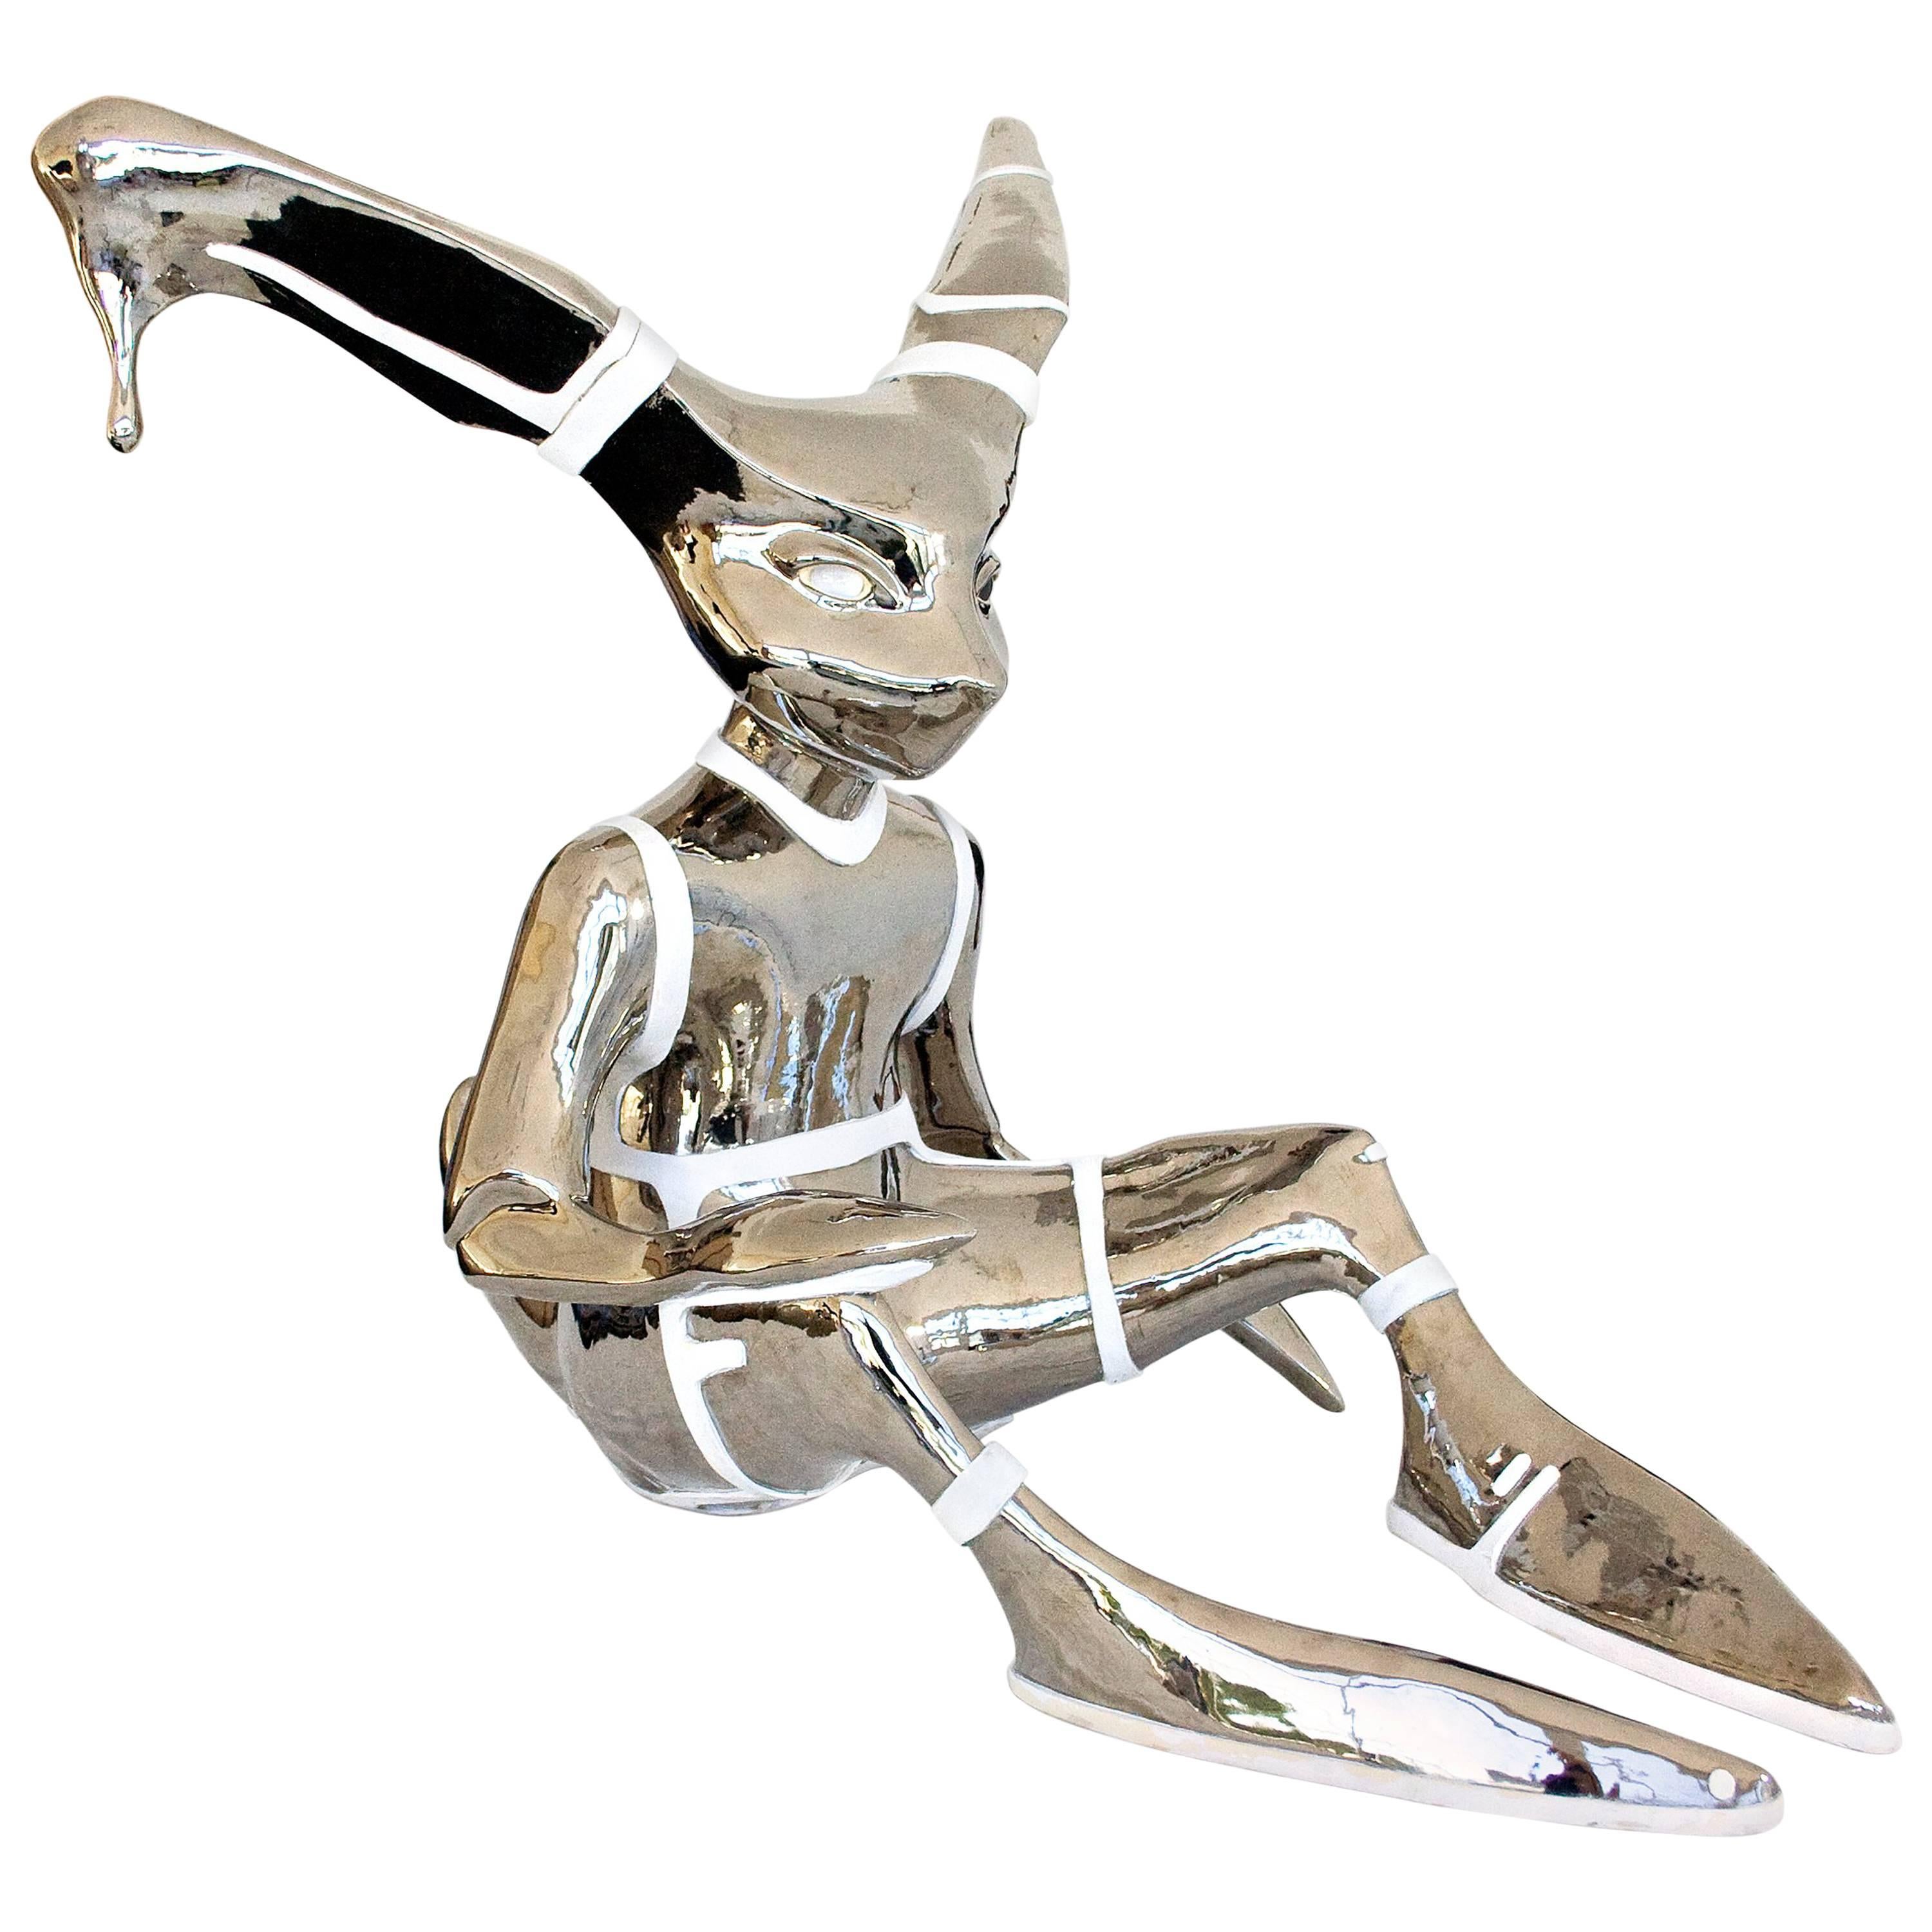 Steel Rabbit Sculpture by Kim Simonsson, Finland, circa 2006